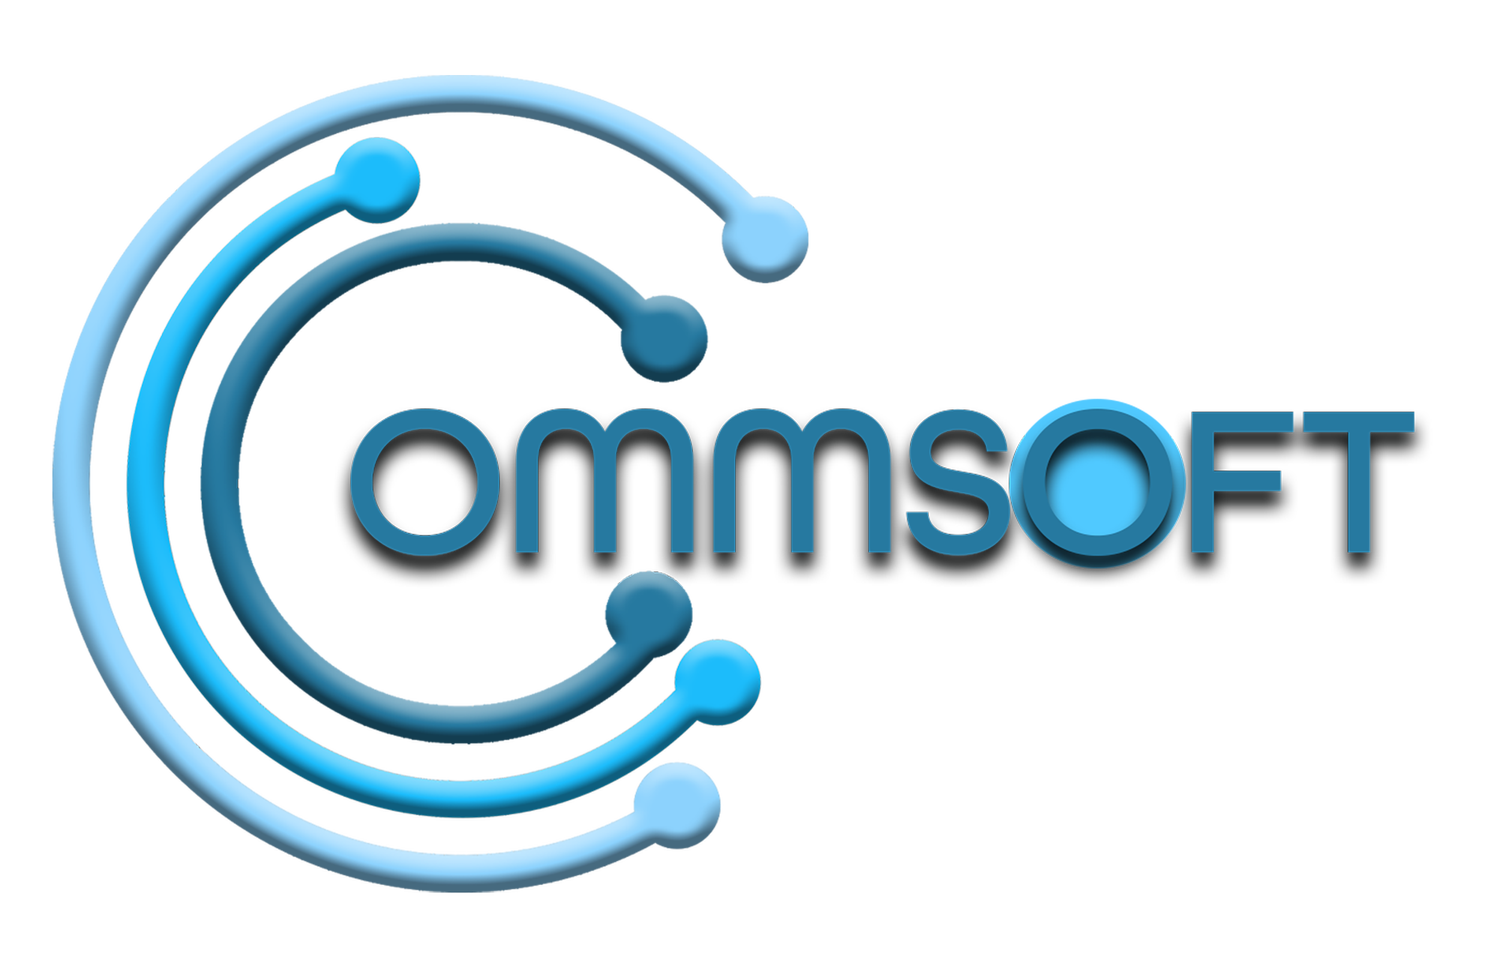 CommSoft